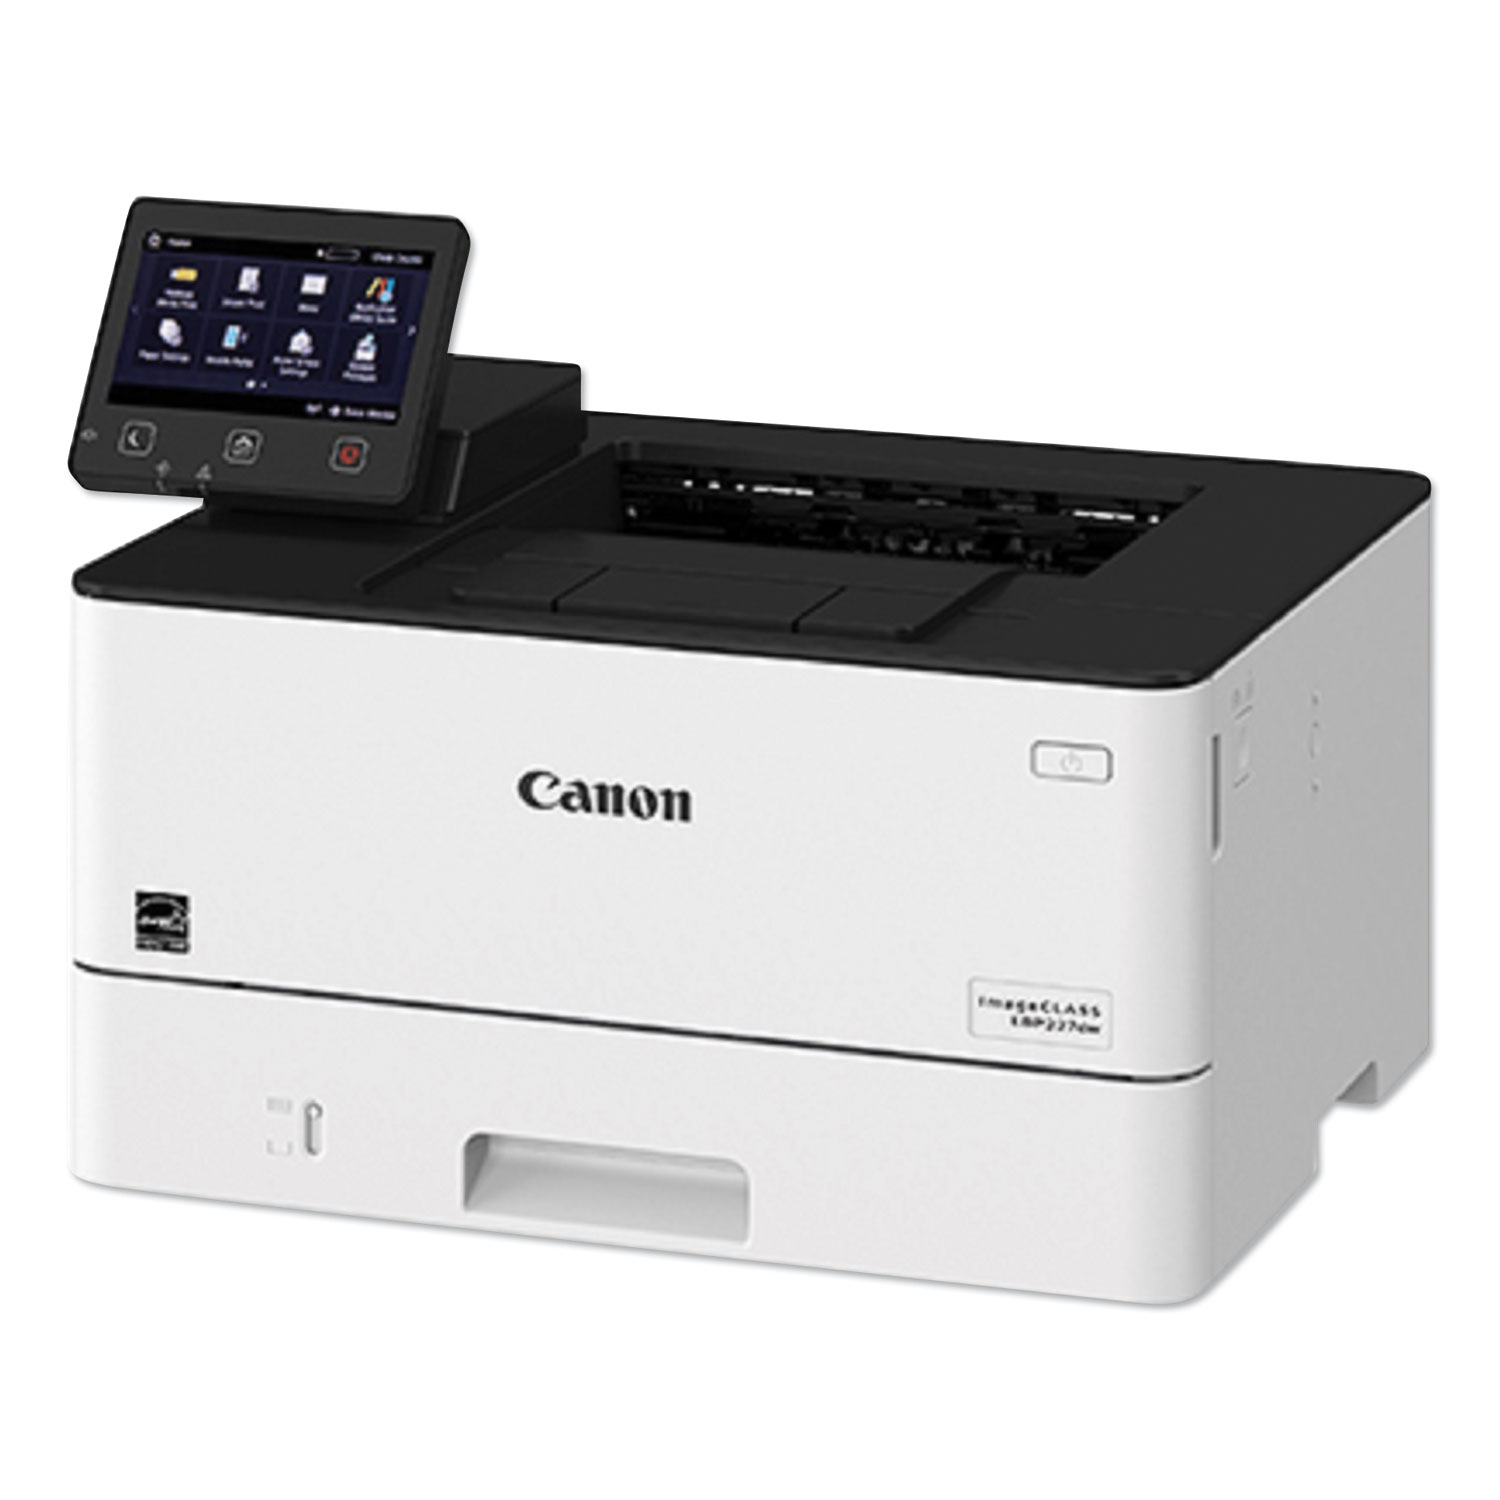  Canon 3516C004 imageCLASS LBP227dw Wireless Laser Printer (CNM3516C004) 